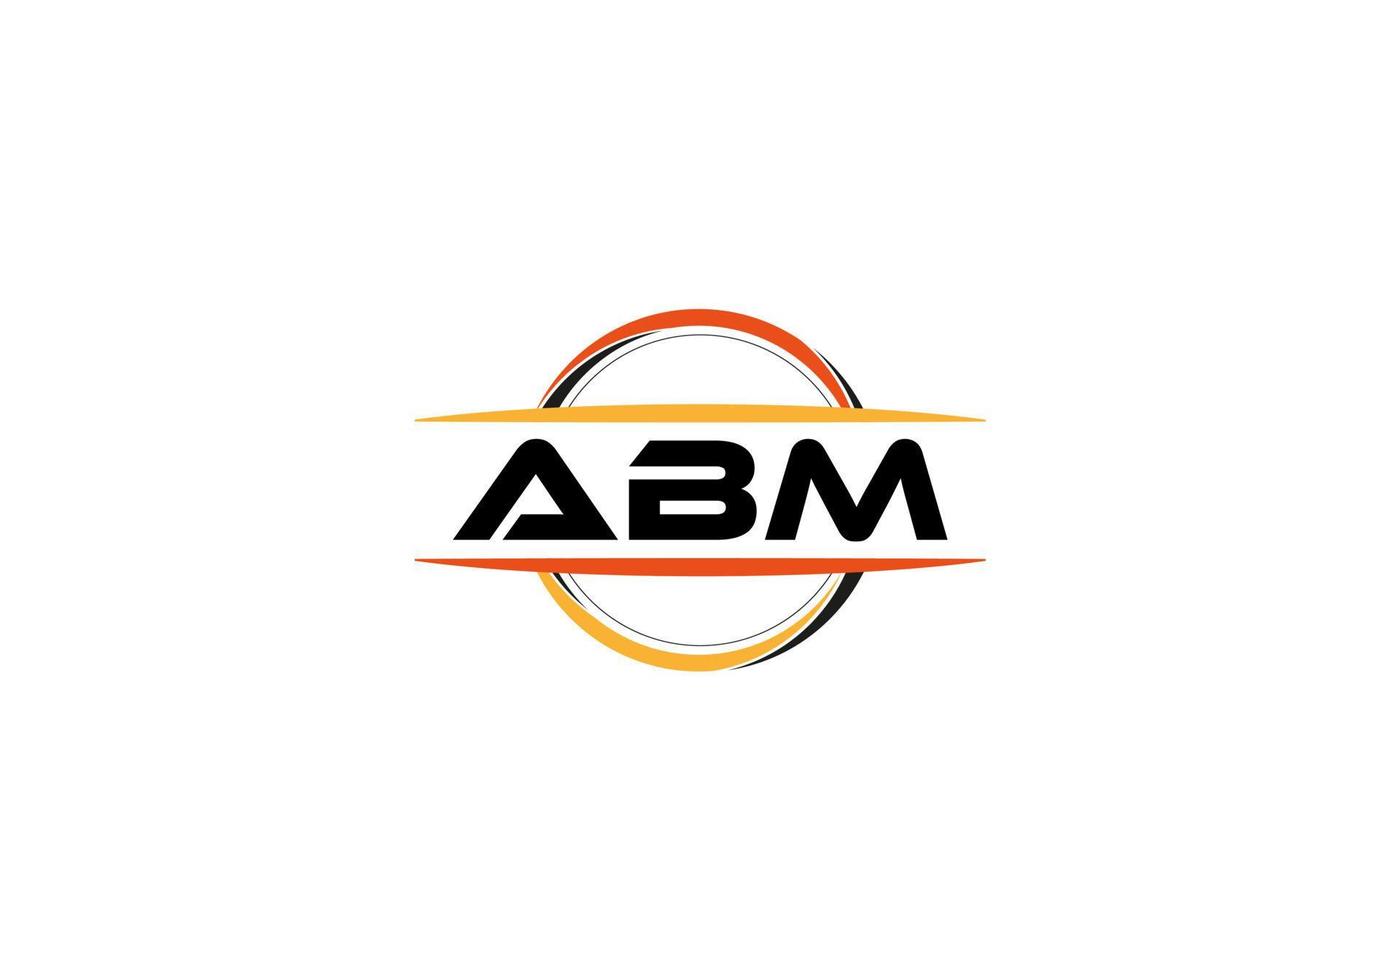 ABM letter royalty mandala shape logo. ABM brush art logo. ABM logo for a company, business, and commercial use. vector